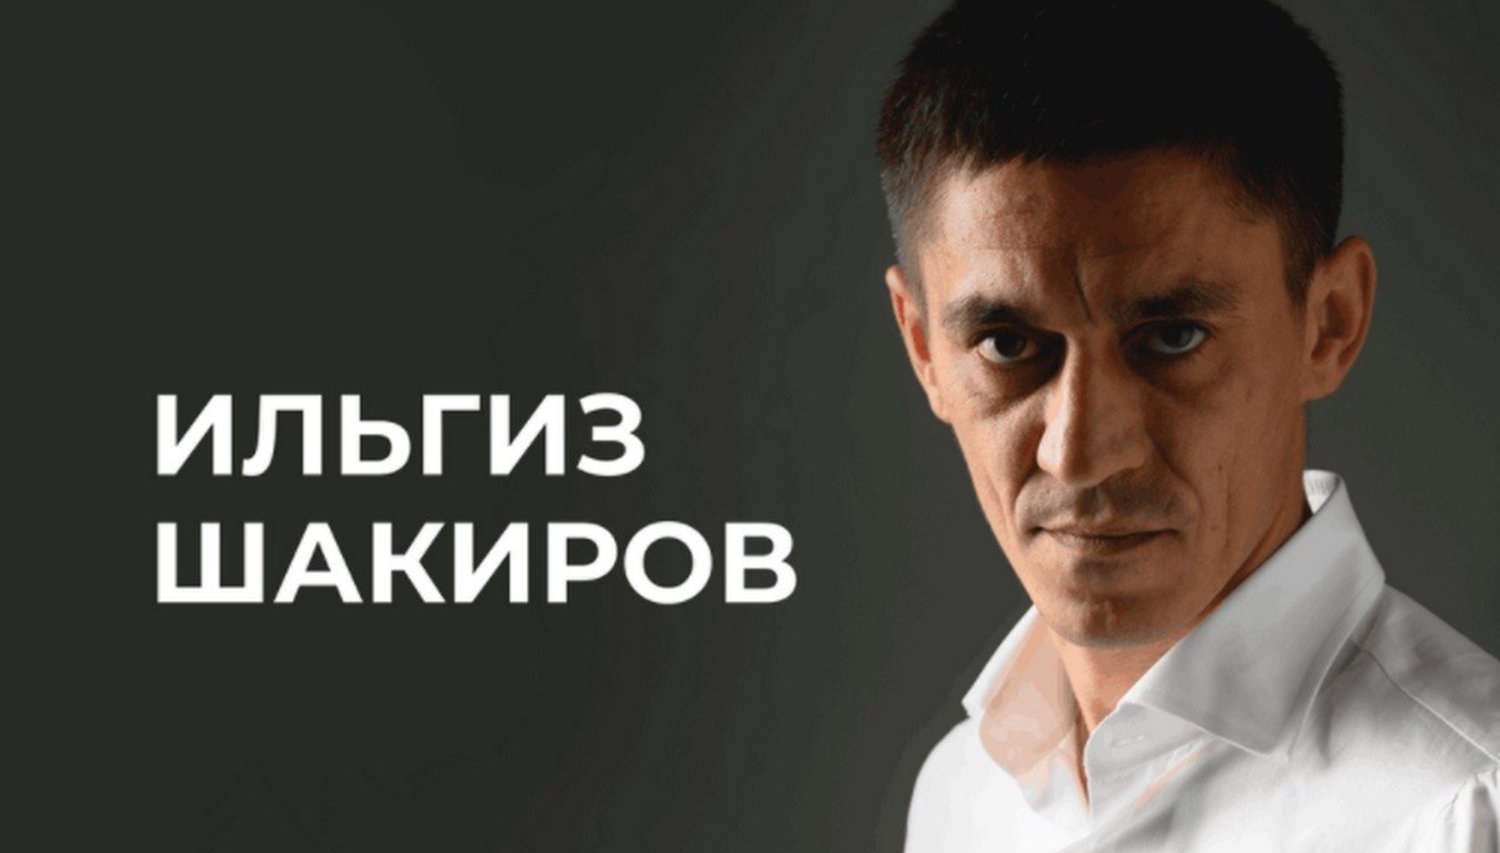 Top Finiko Crypto Pyramid Executive Arrested in Russia’s Tatarstan